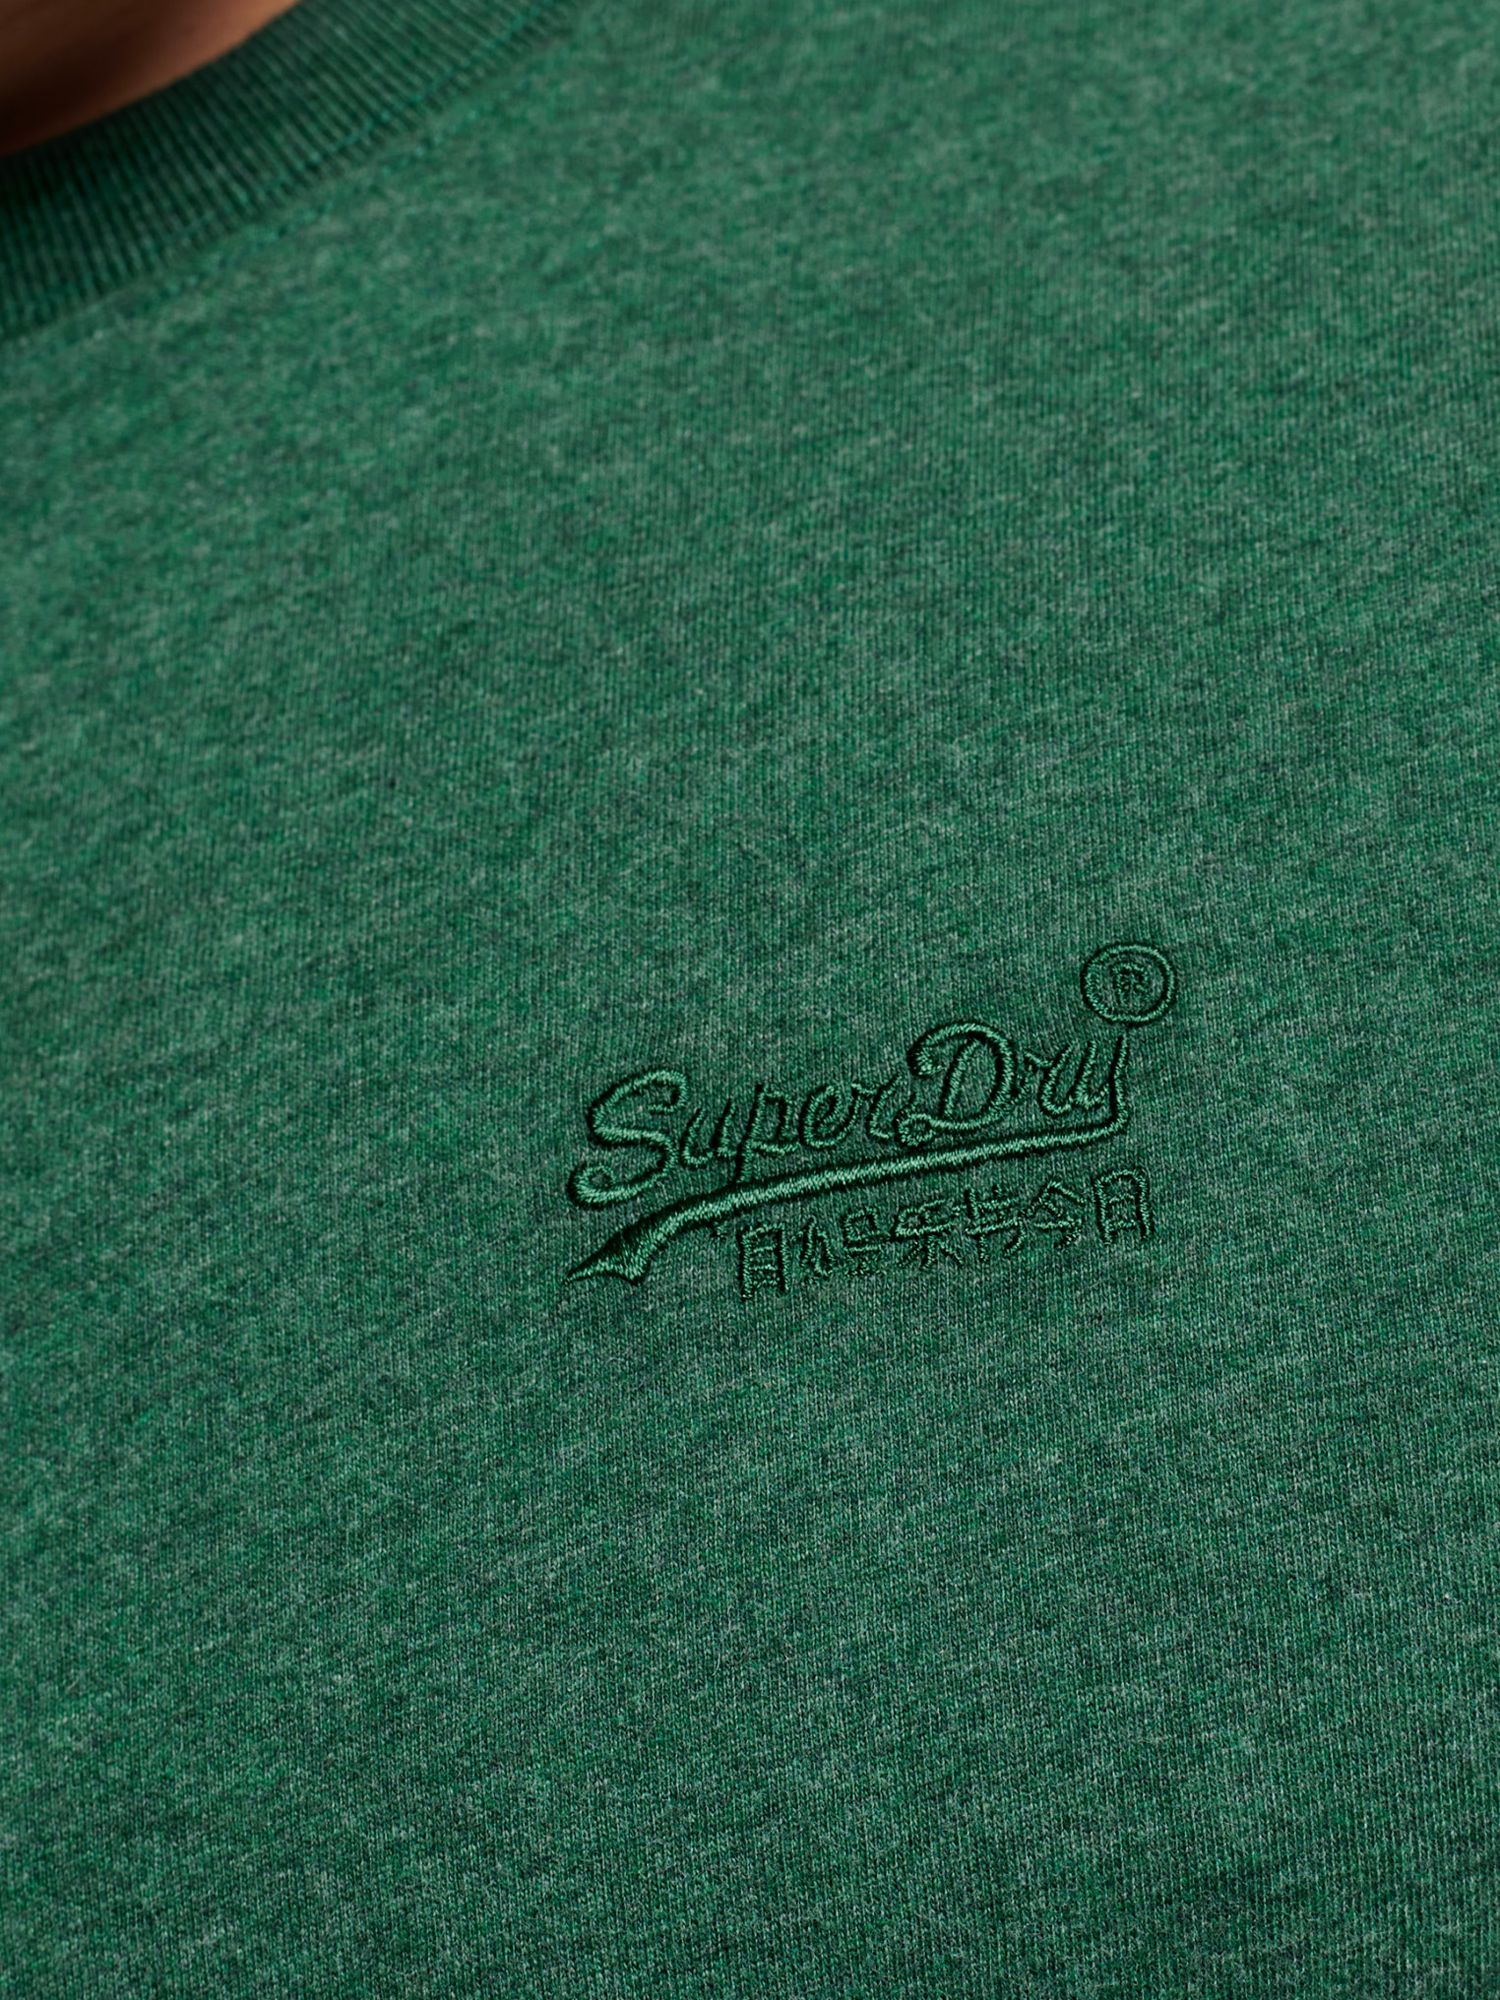 Superdry Organic Cotton Essential Logo T-Shirt, Heritage Pine Green, S